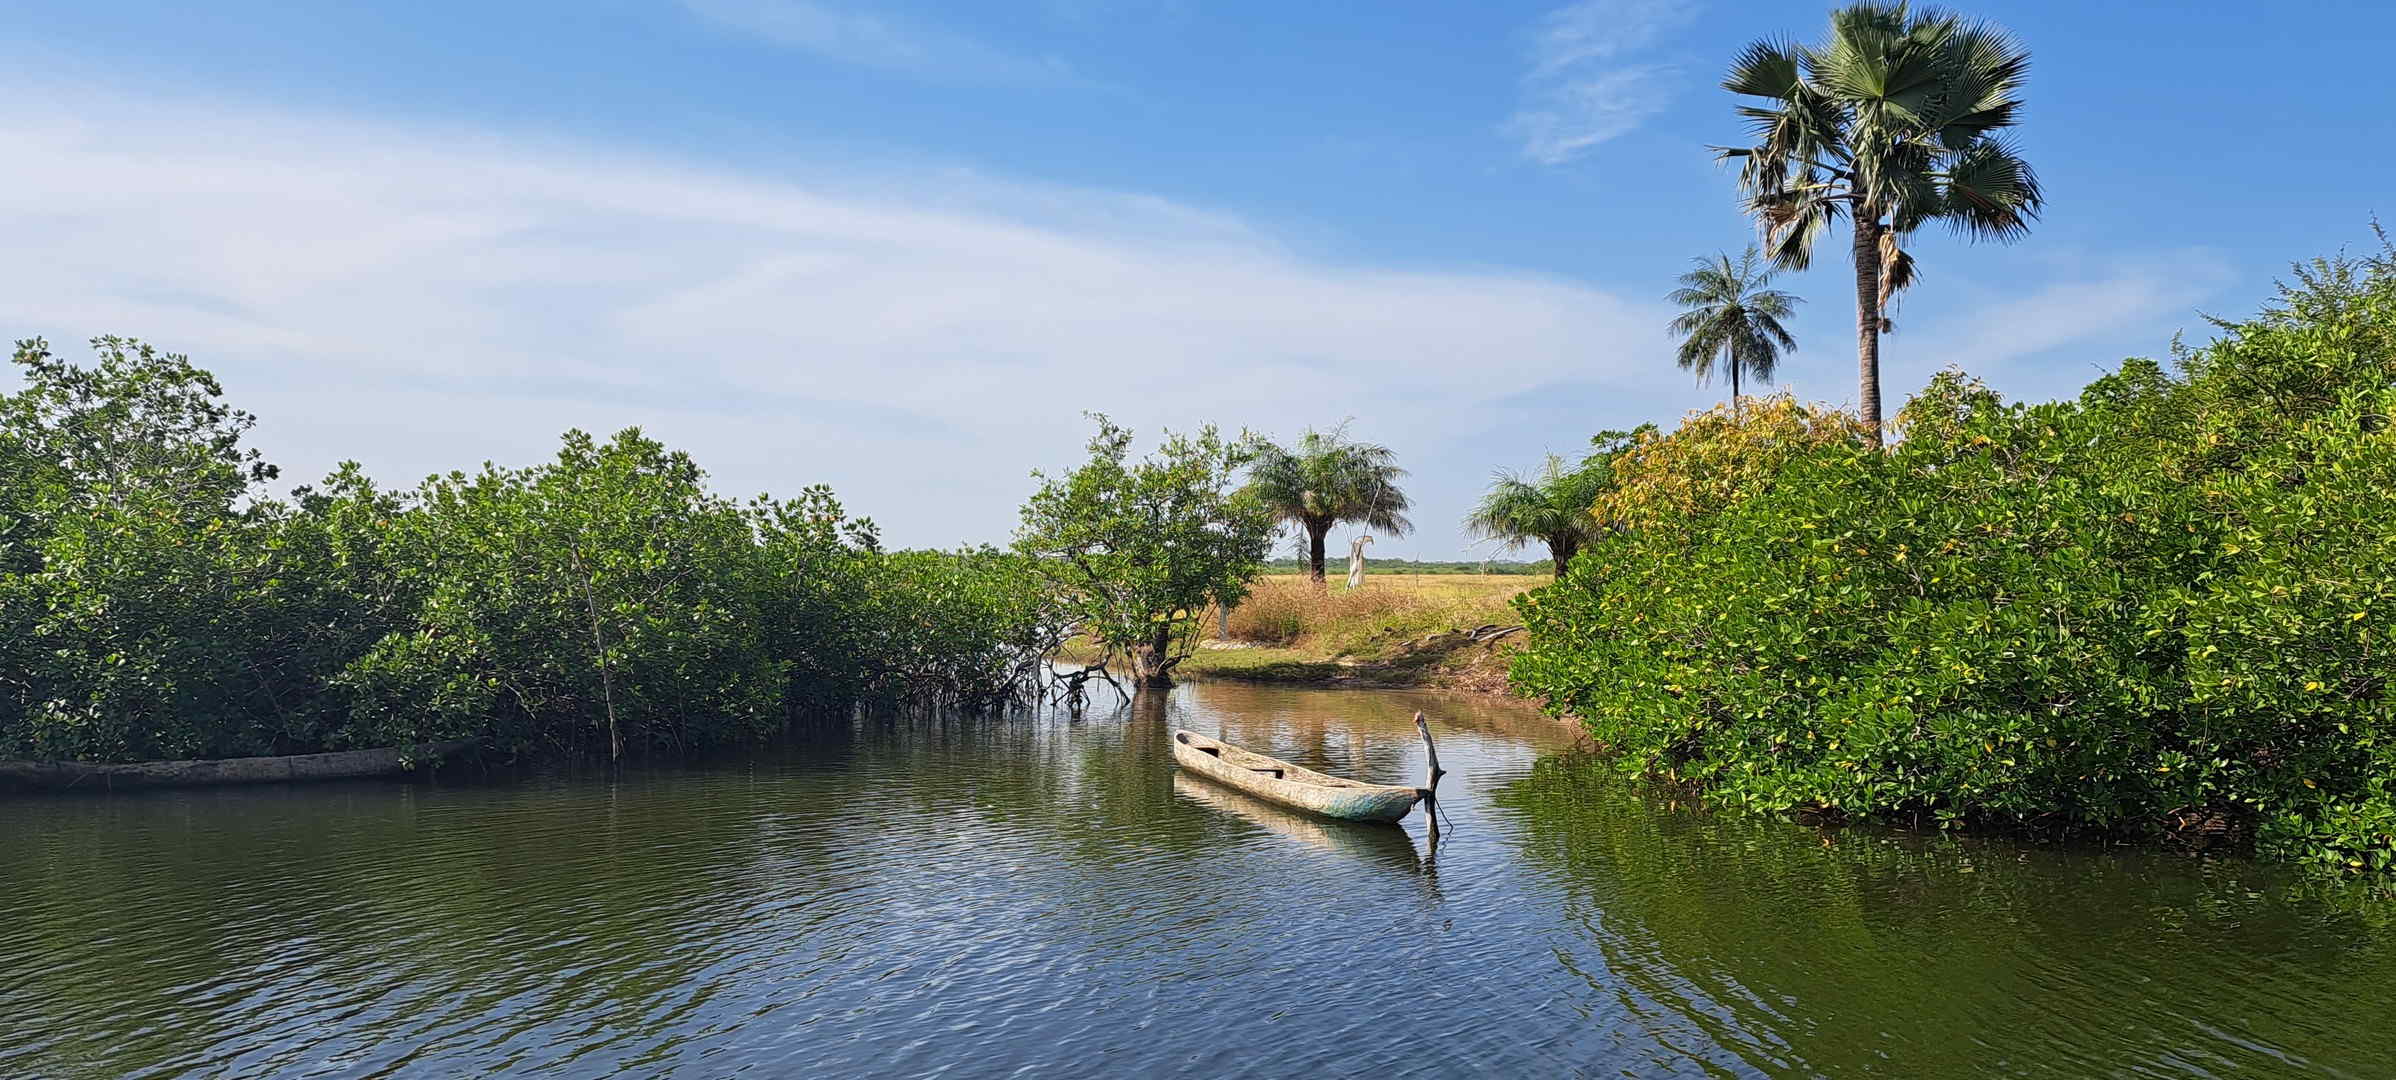 39 – In the rivers of Senegal